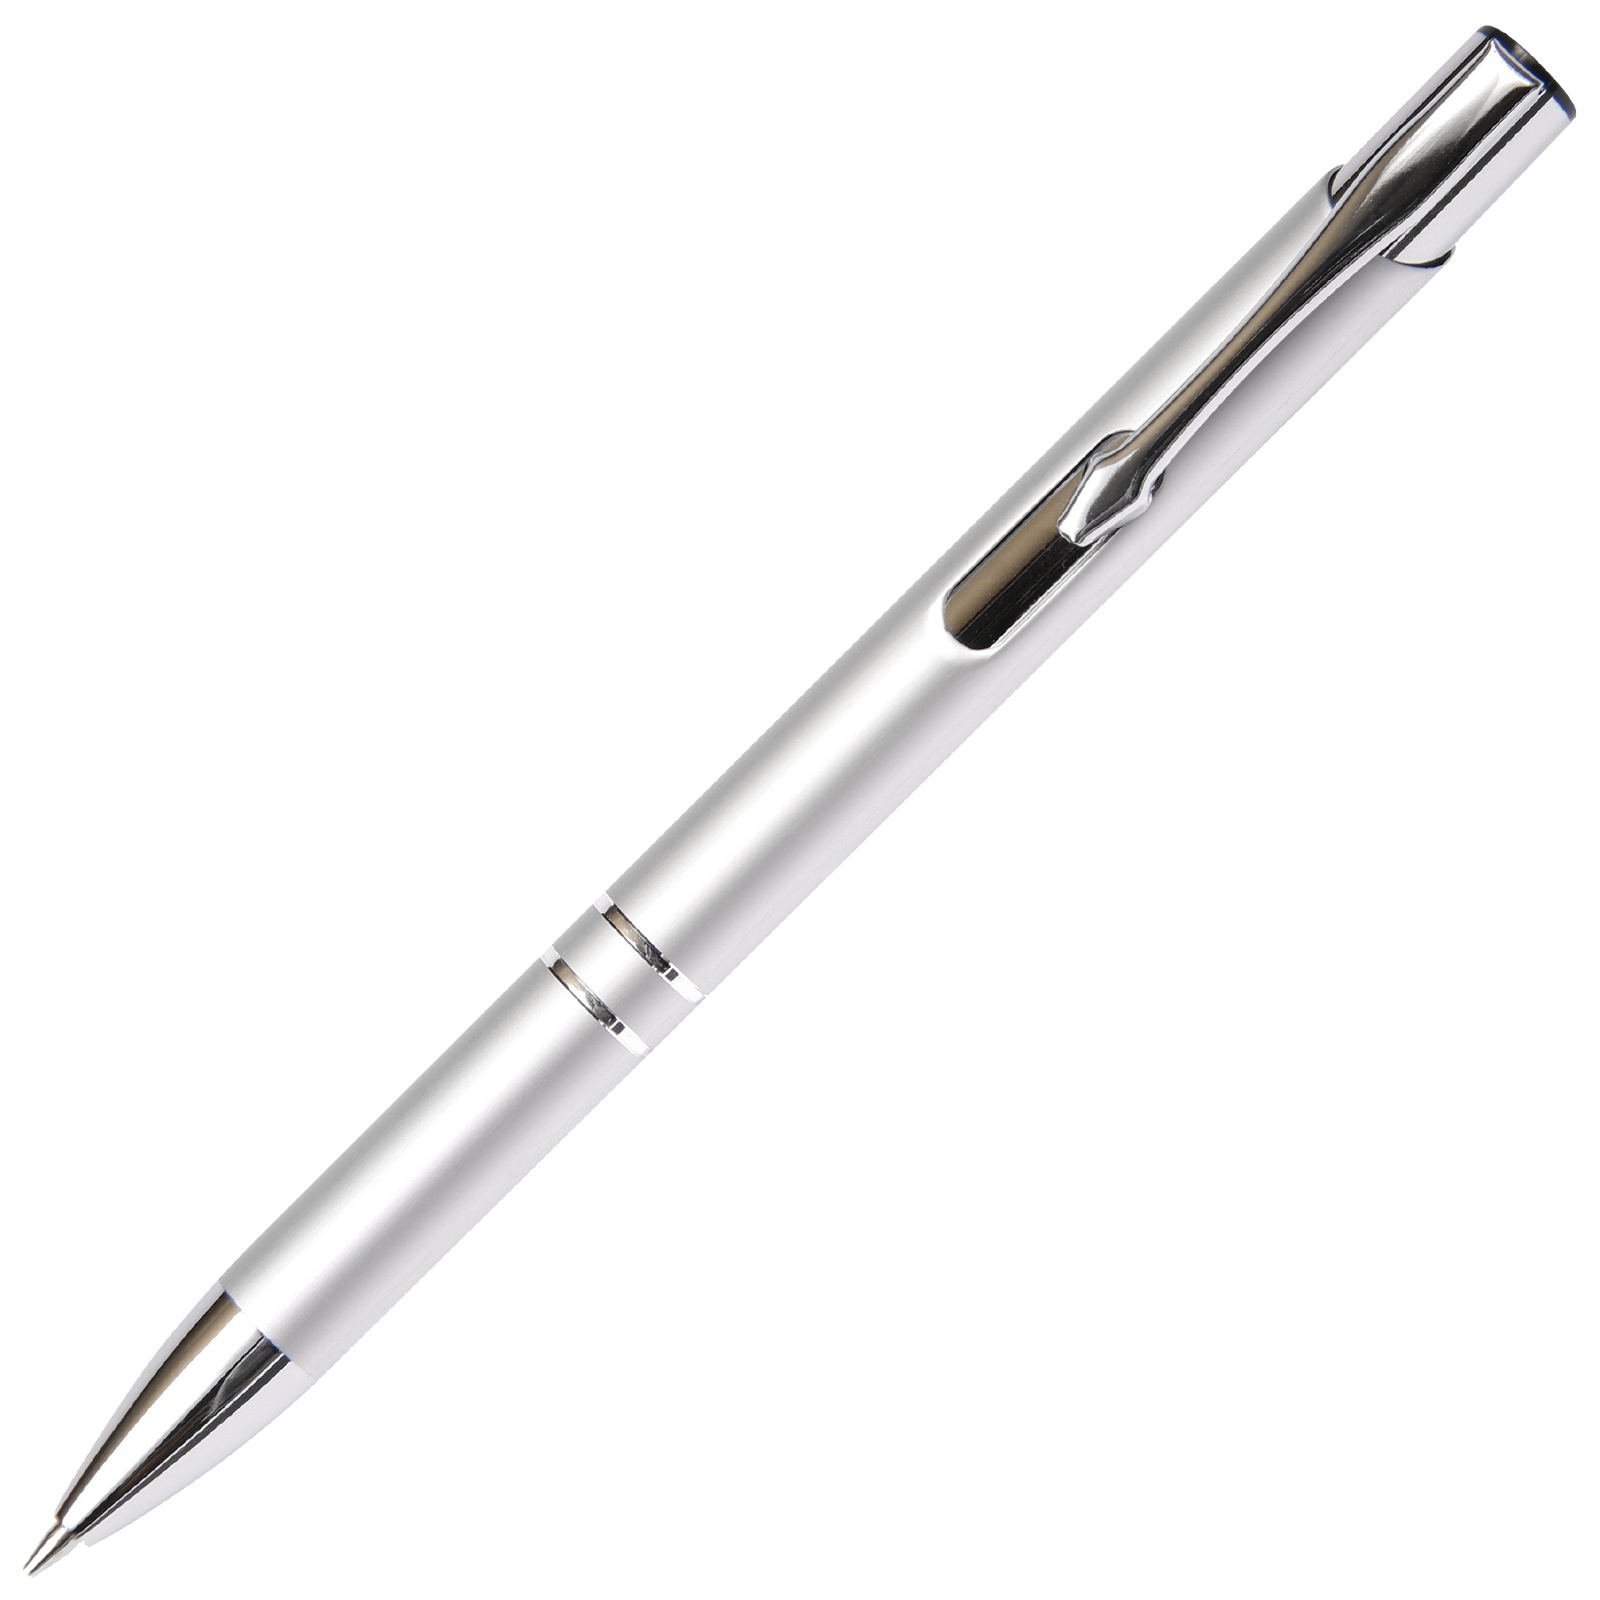 Budget Friendly JJ Mechanical Pencil - Silver with Standard 0.7mm Lead Refill By Lanier Pens